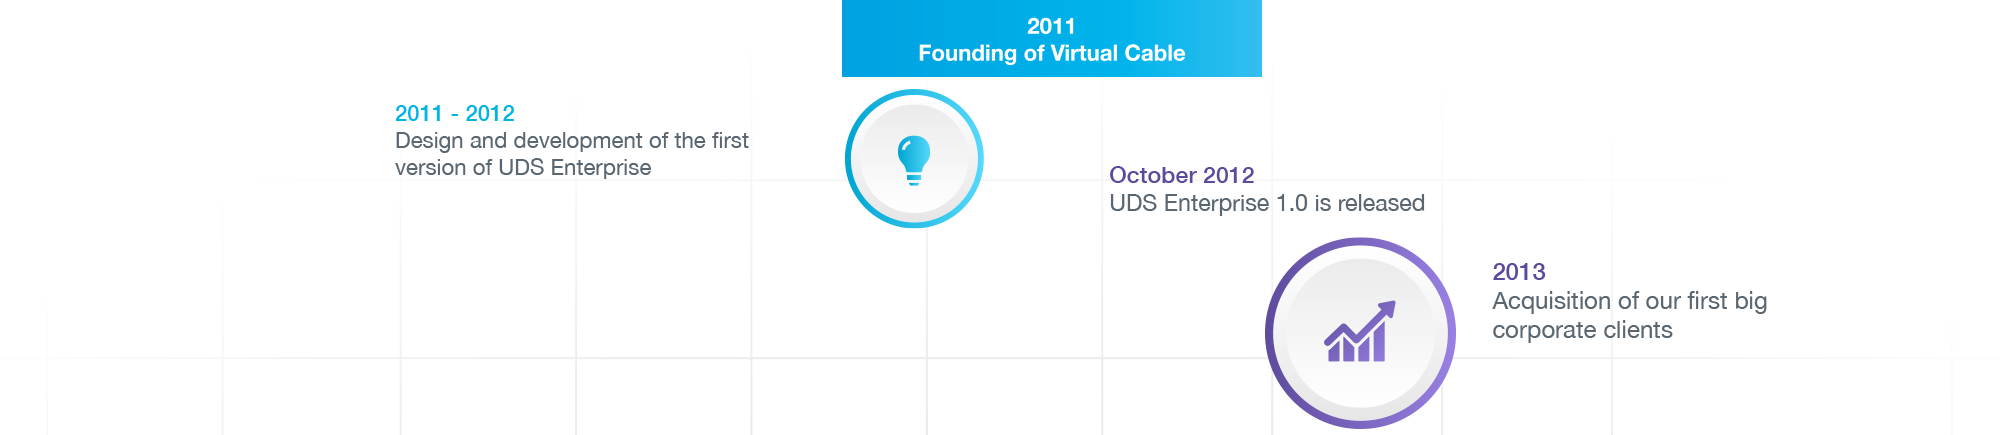 Our MILESTONES in desktop virtualization (2011 -2013) | Virtual Cable